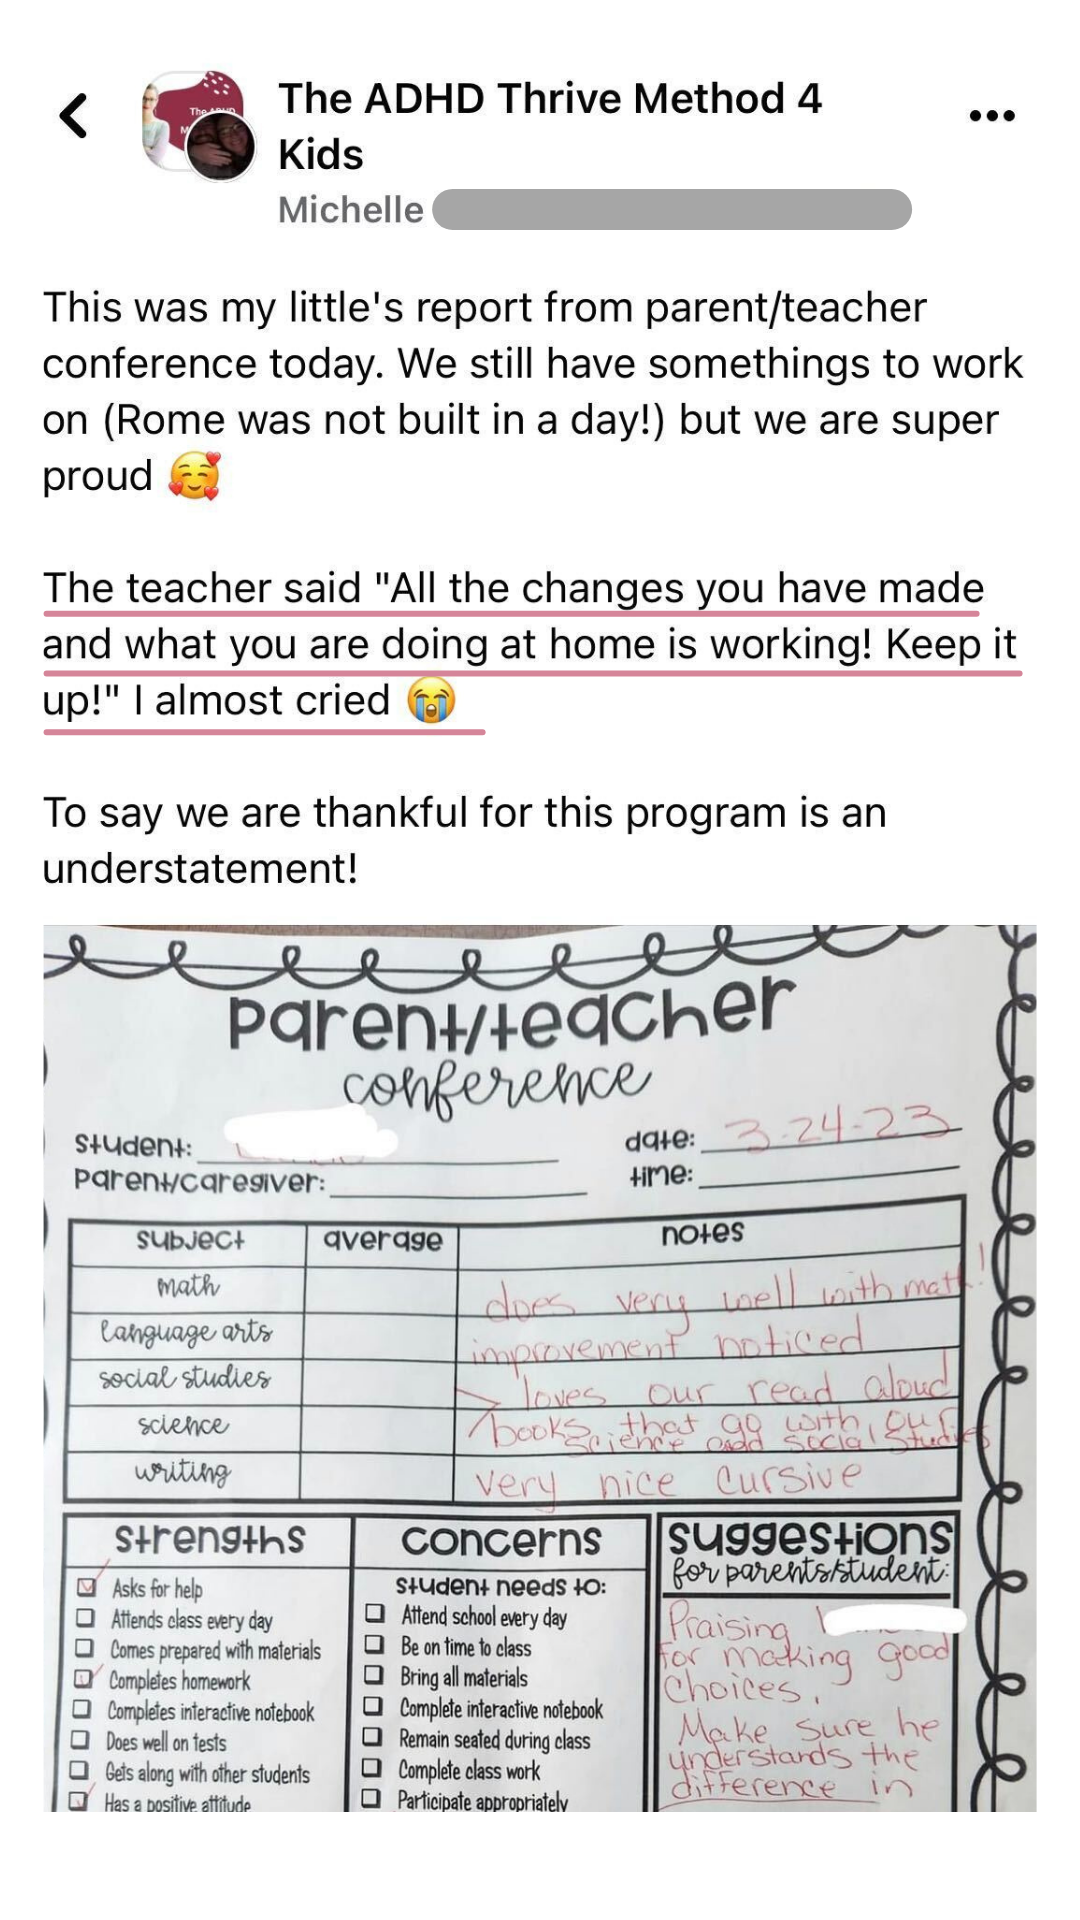 Michelle_ParentTeacher report